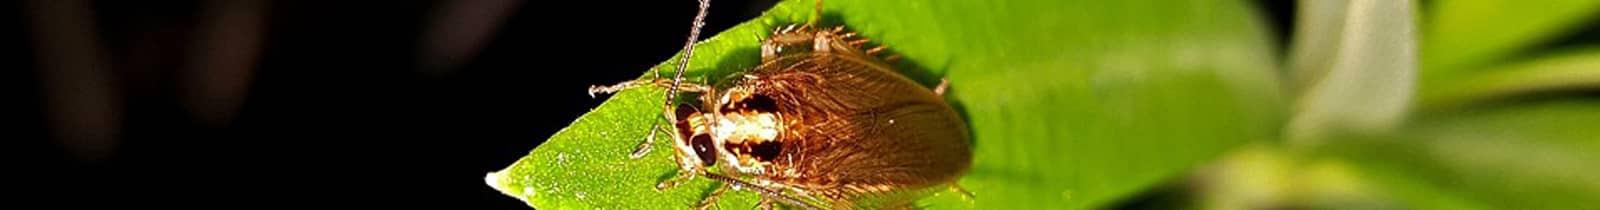 Cockroach-treatment pest control Nashville, TN